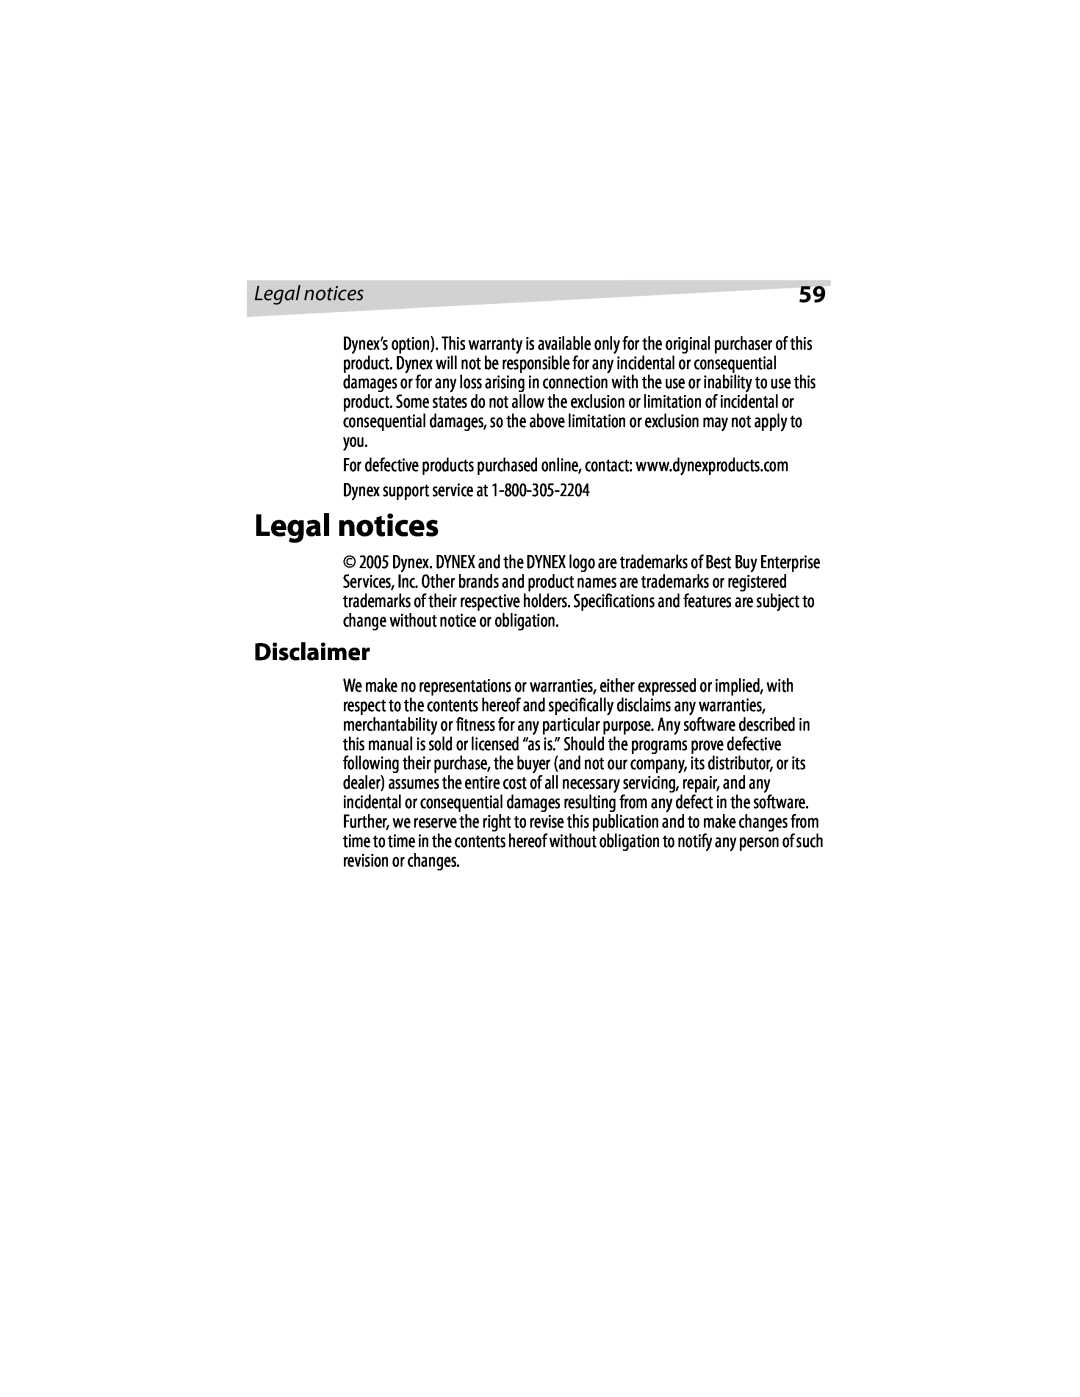 Dynex DX-E401 manual Legal notices, Disclaimer 